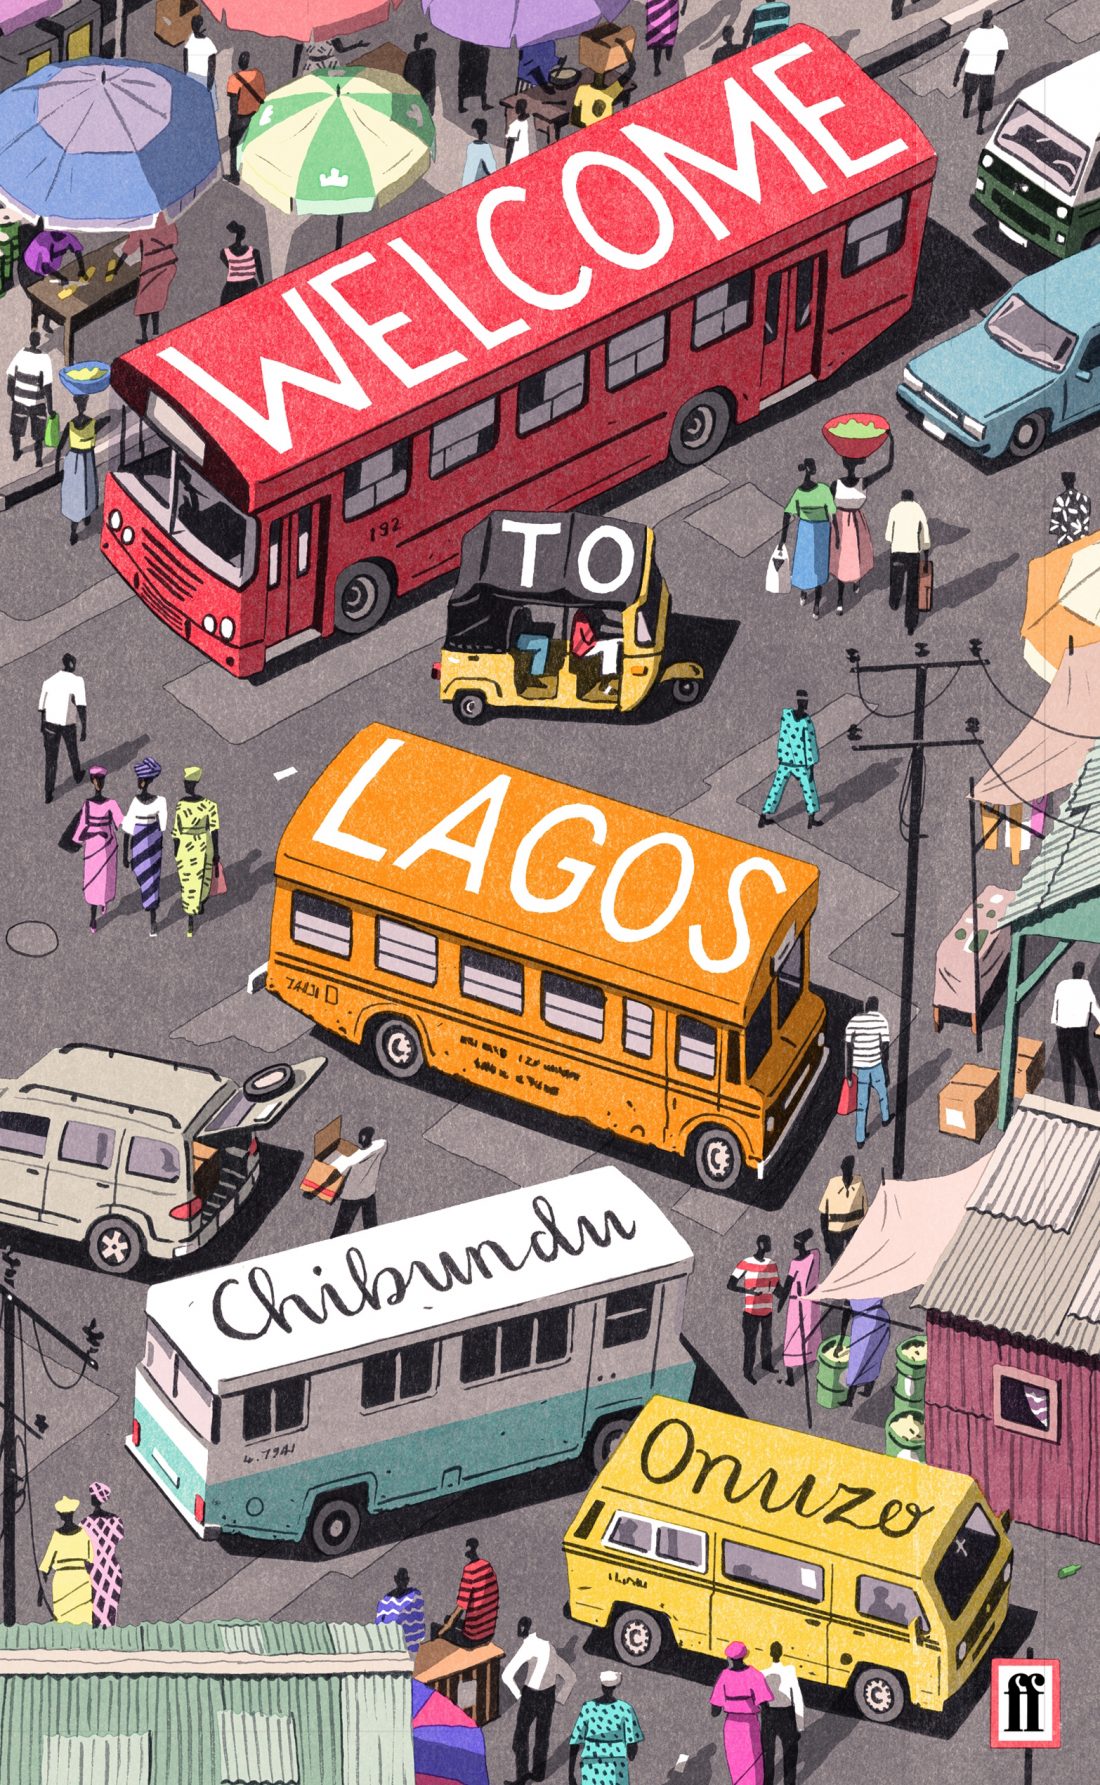 Book of the week: Welcome to Lagos, by Chibundu Onuzo